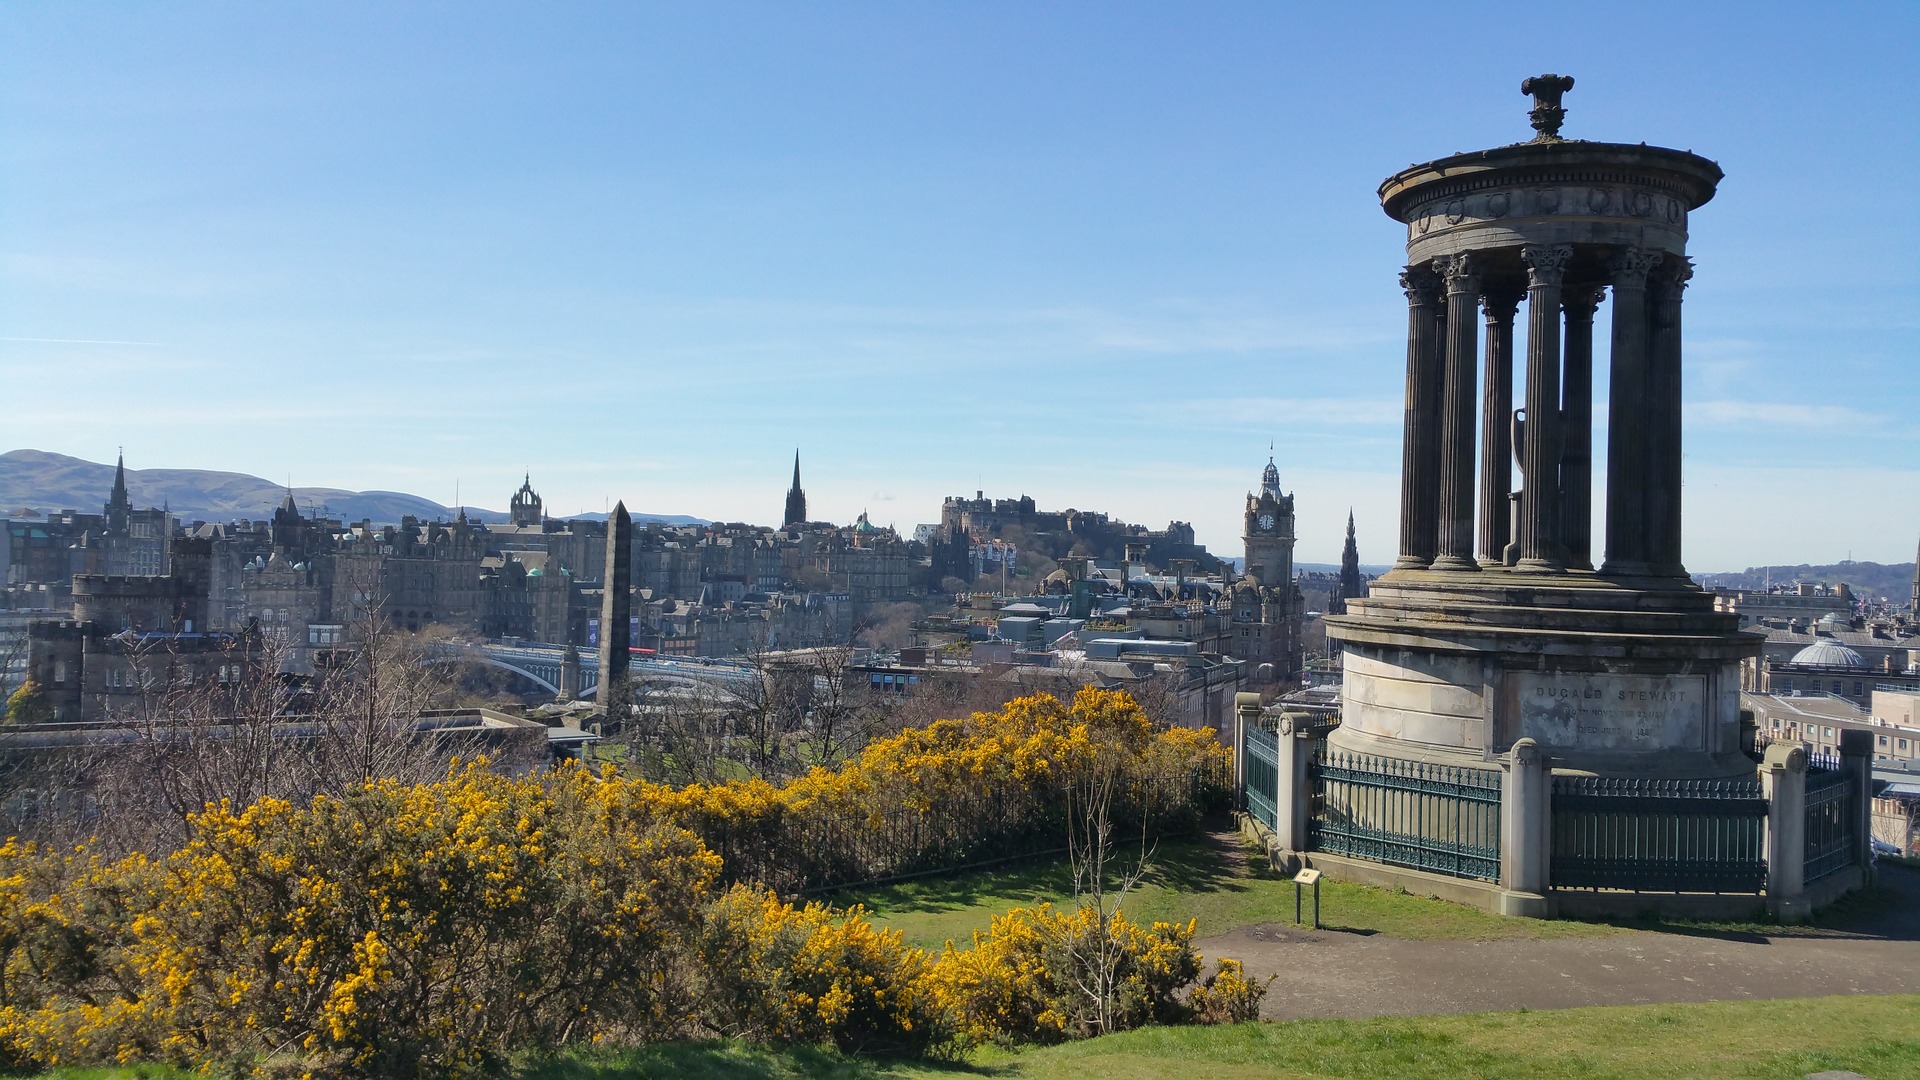 Amazing view from Carlton Hill over Edinburgh